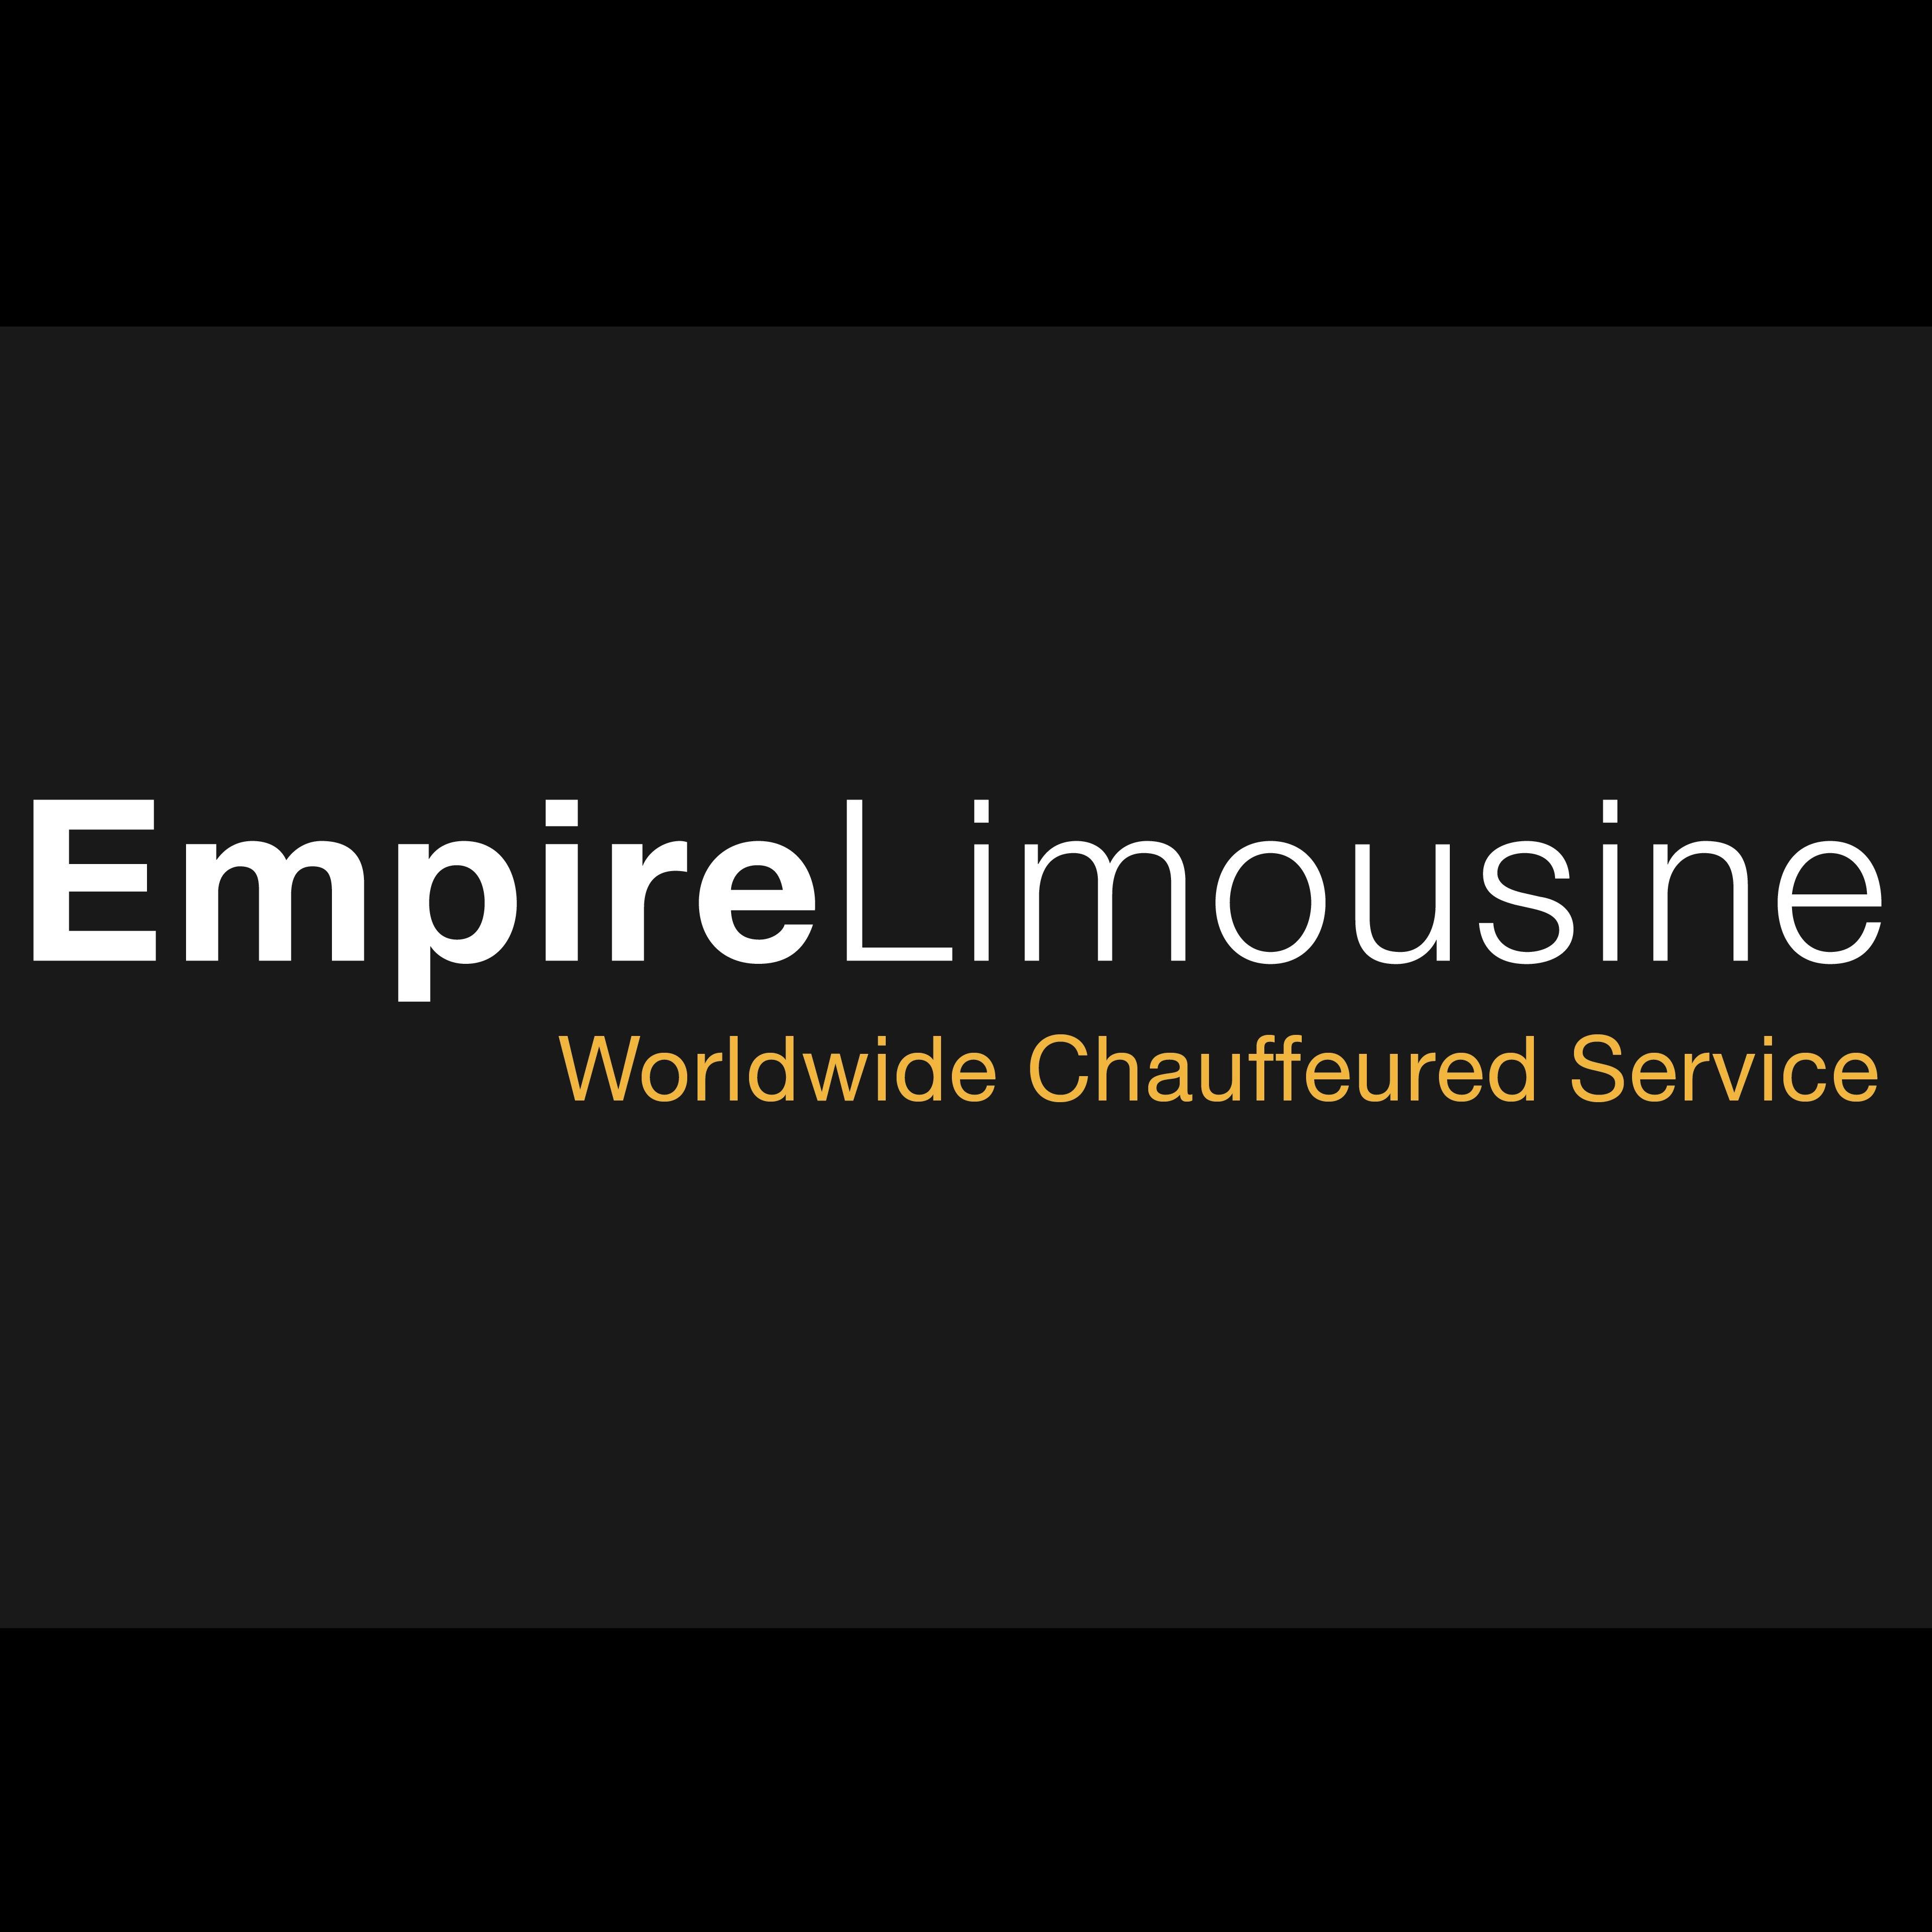 Empire Limousine